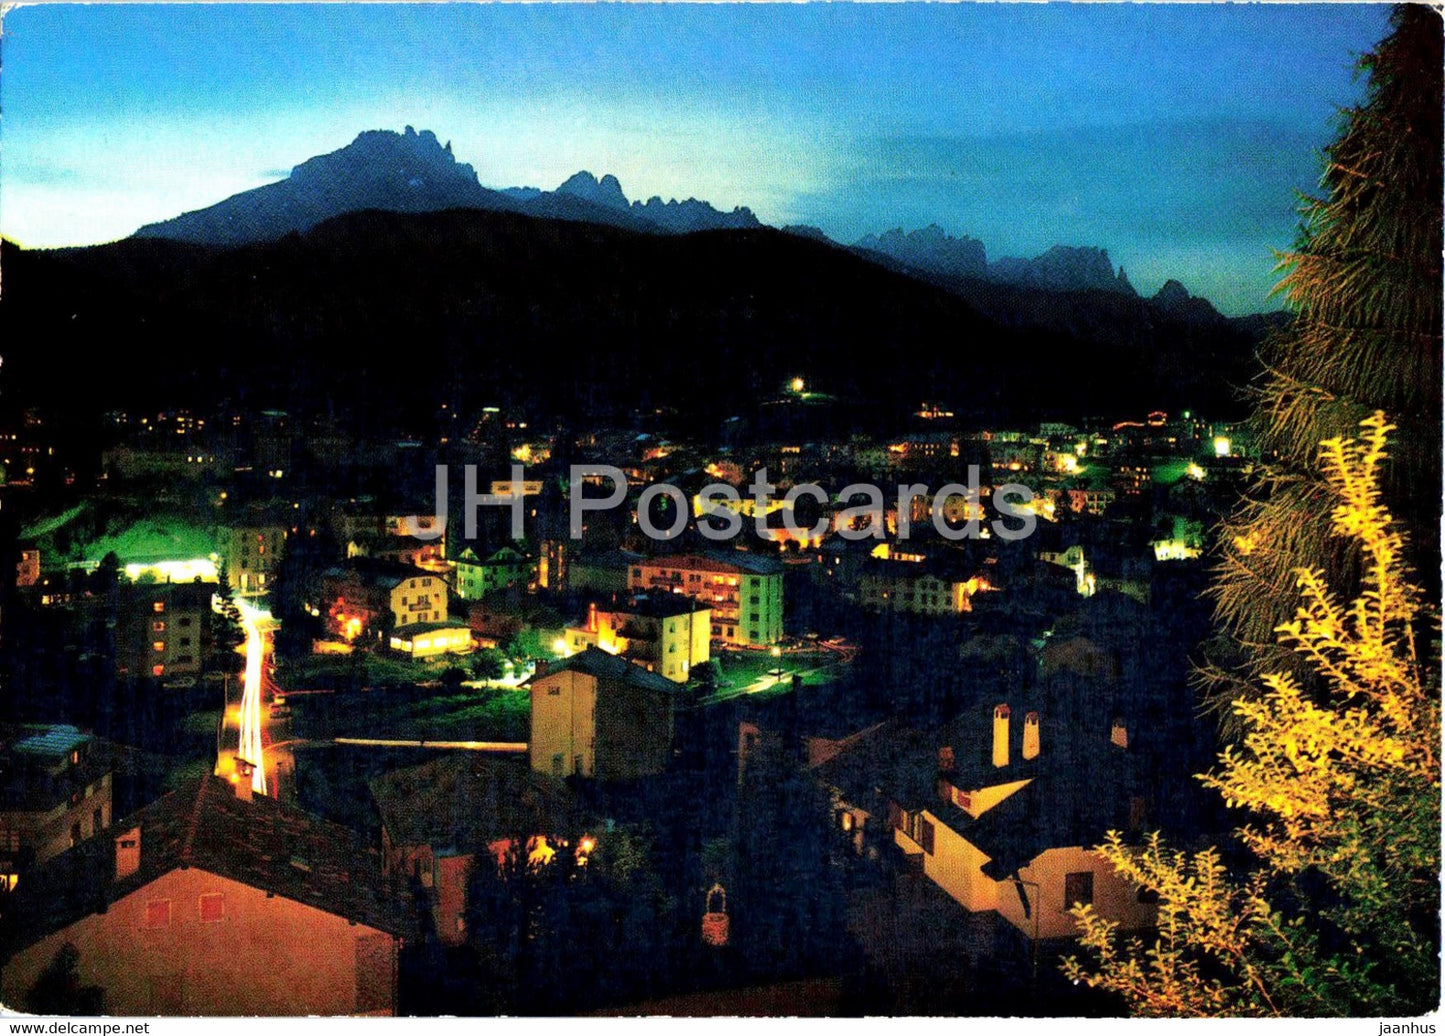 Moena 1184 m - Panorama di Notte - Dolomiti - Trentino - Italy - unused - JH Postcards